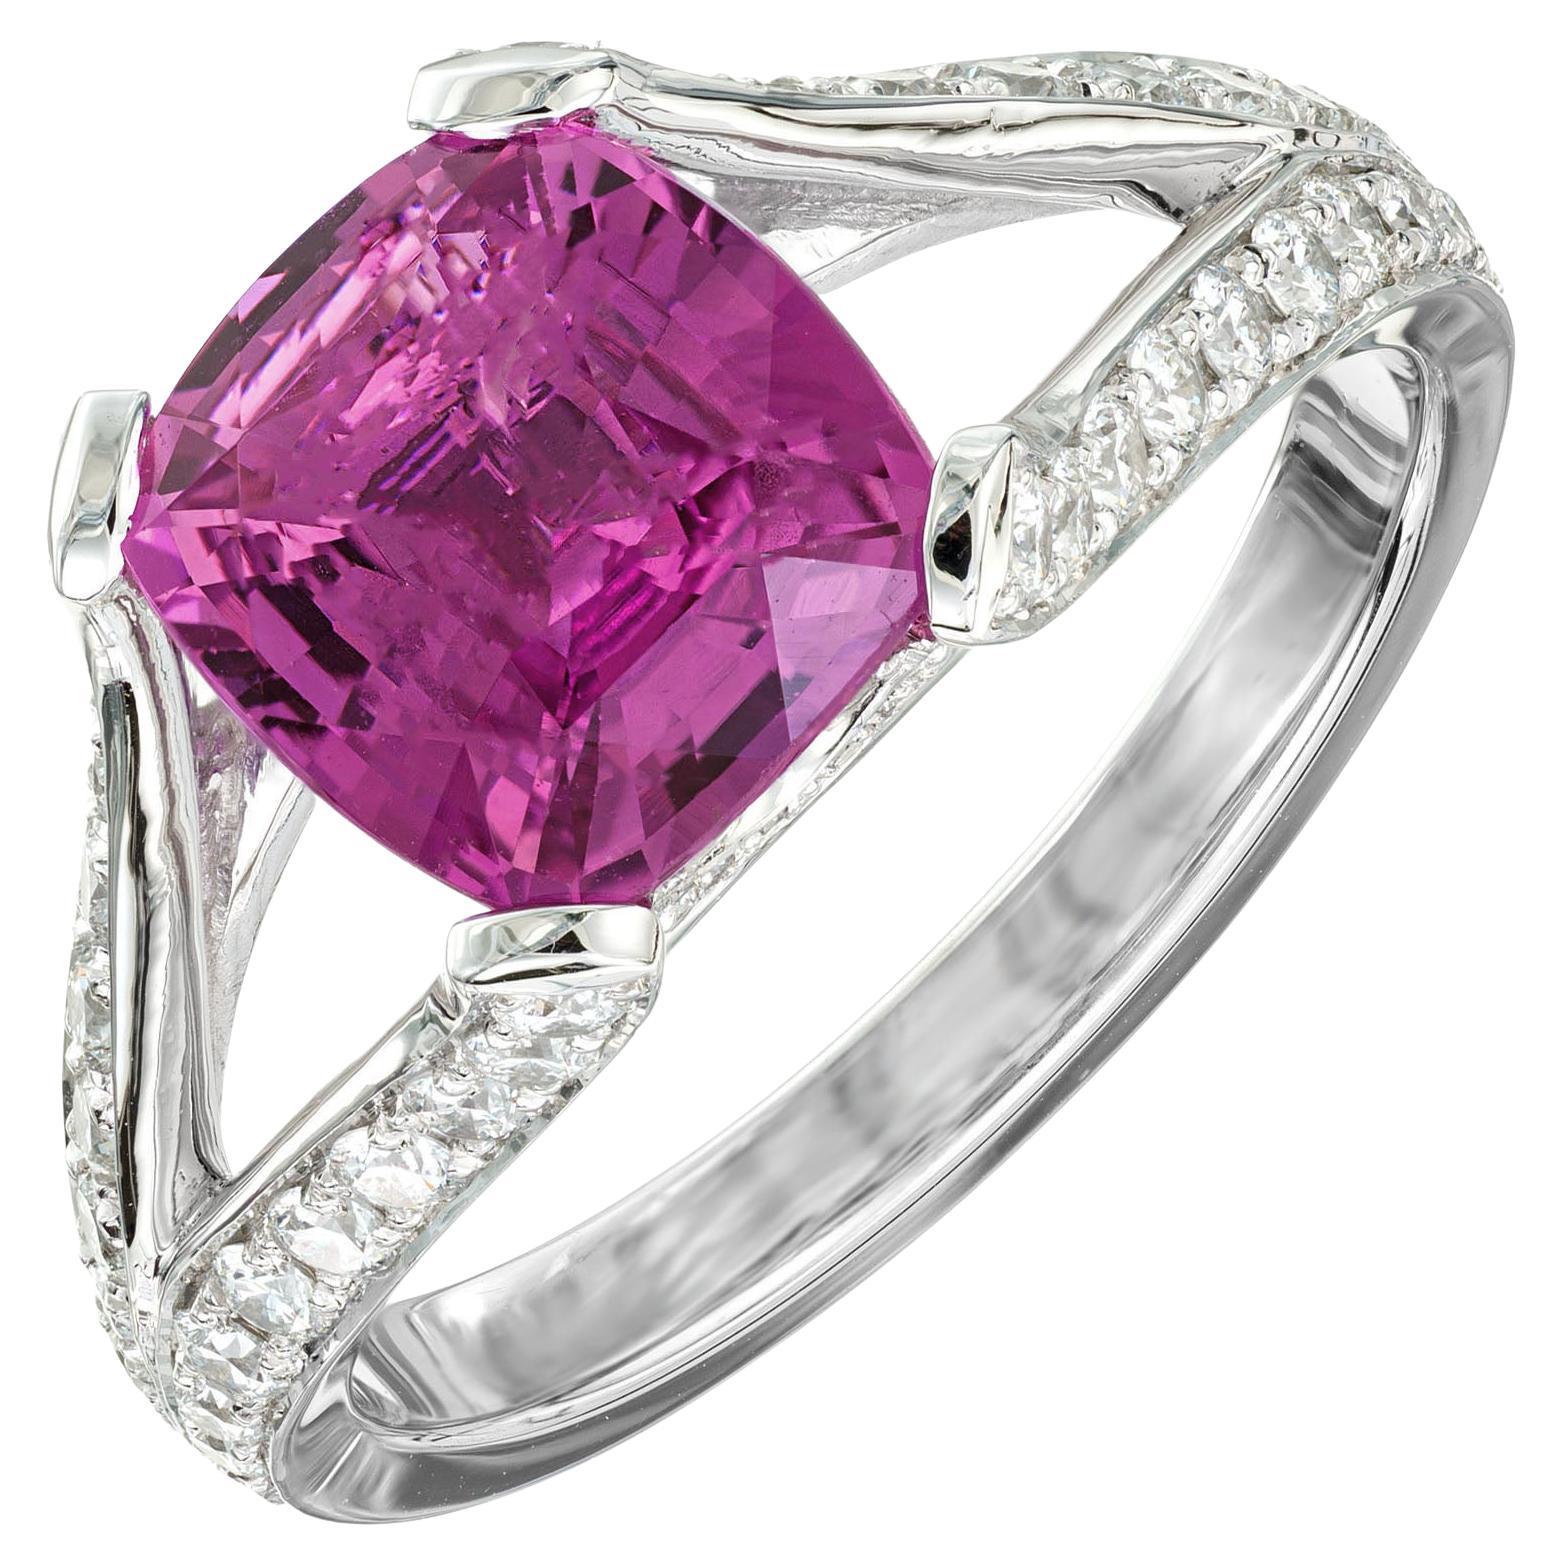 Peter Suchy GIA 2.76 Carat Cushion Cut Sapphire Diamond Platinum Engagement Ring